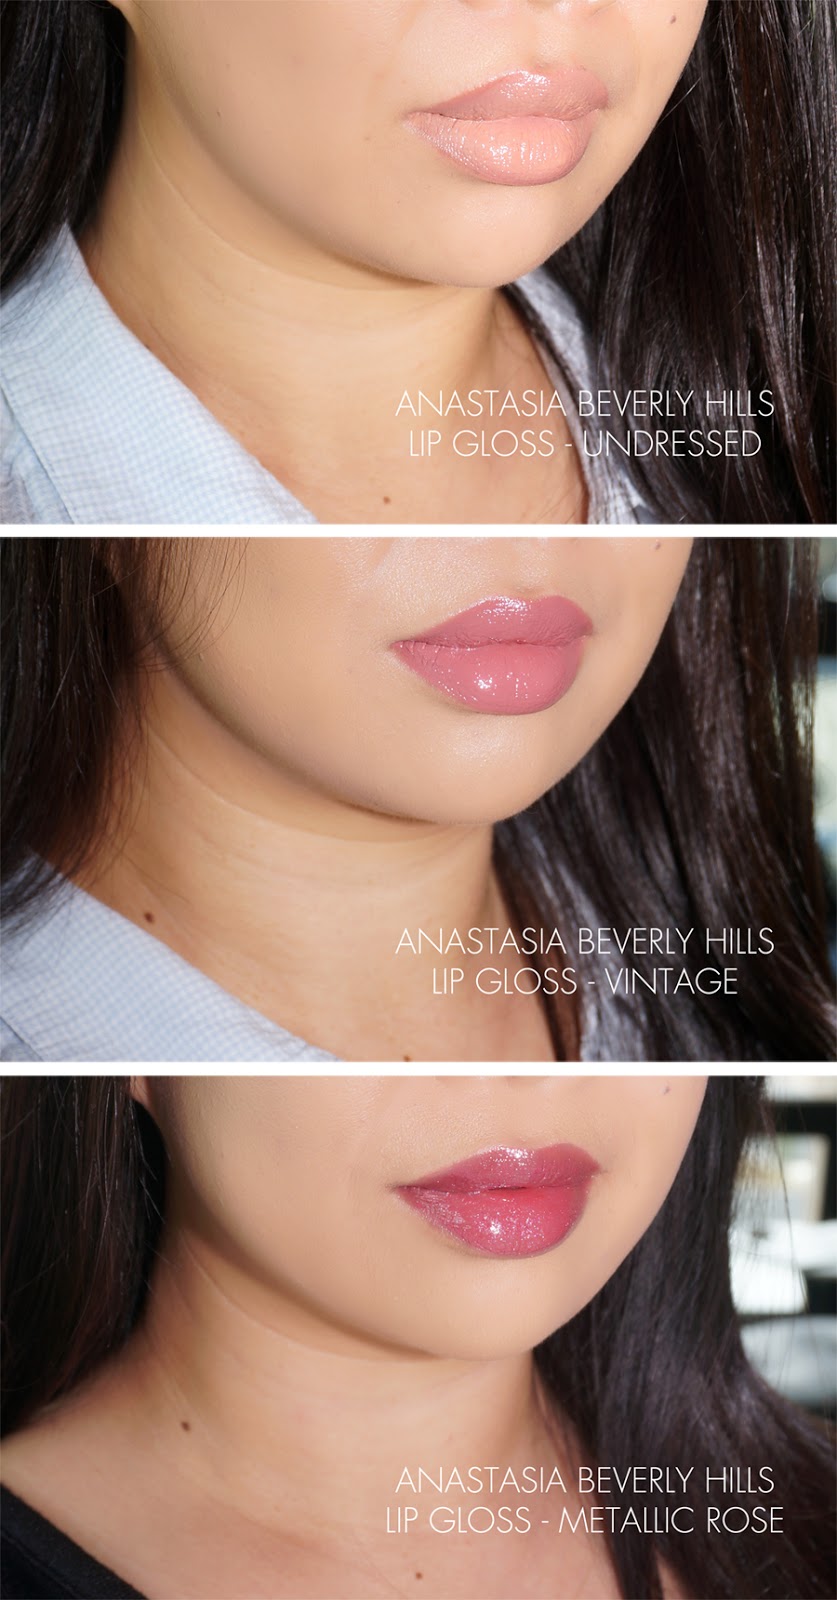 Anastasia Beverly Hills Lip Gloss Undressed Vintage And Metallic